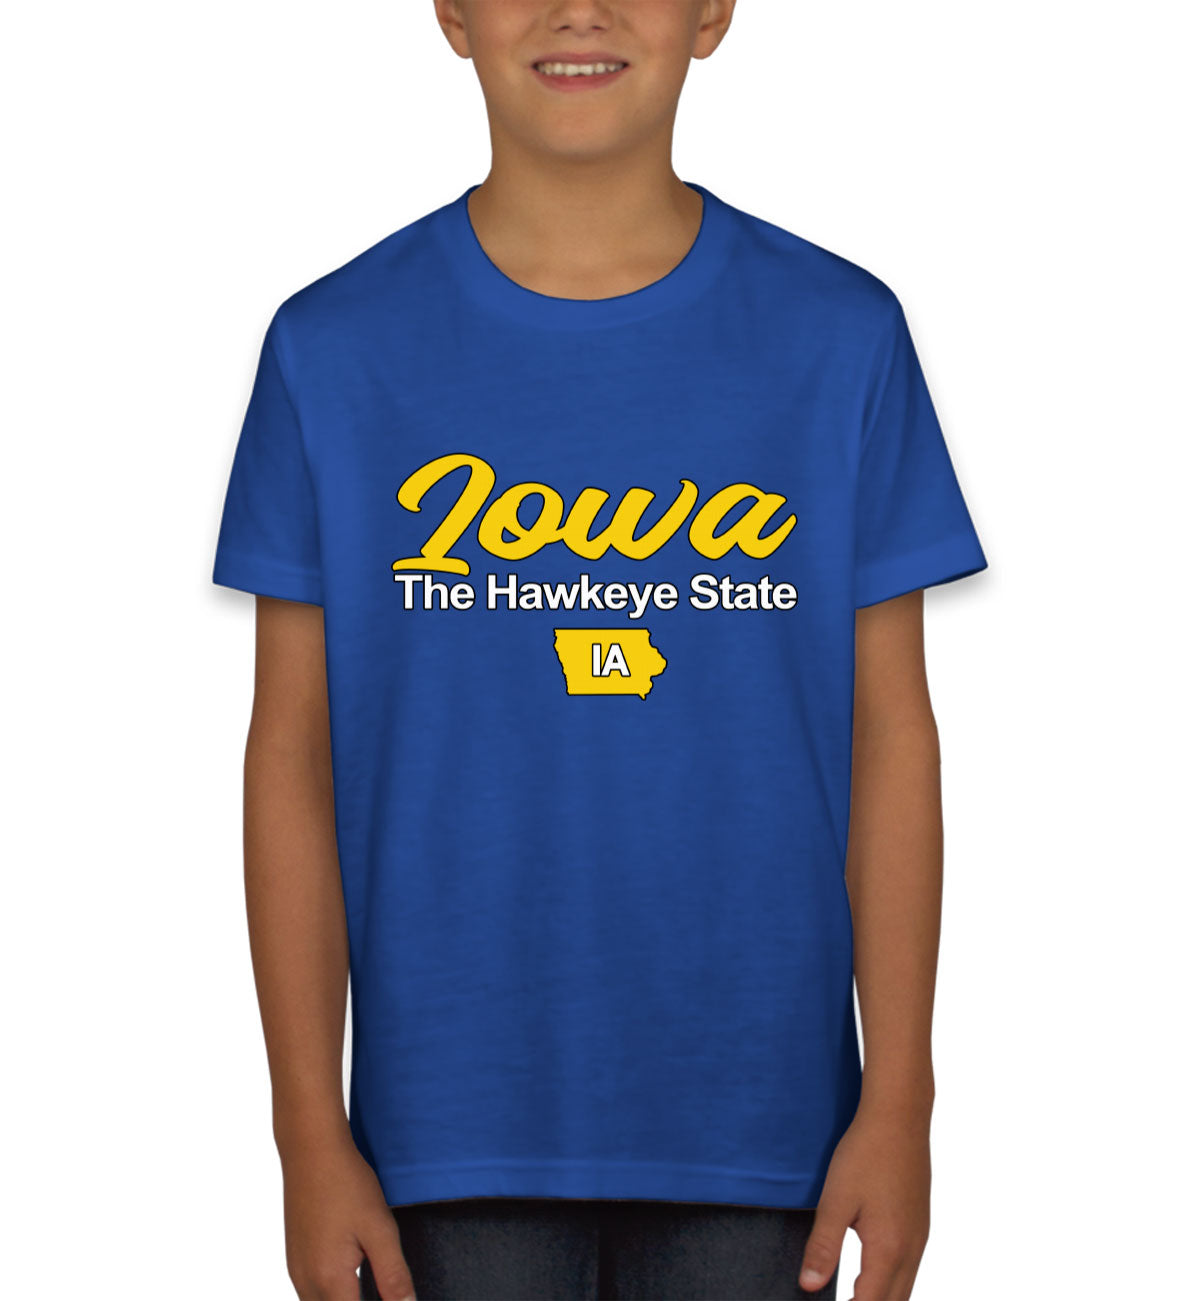 Iowa The Hawkeye State Youth T-shirt